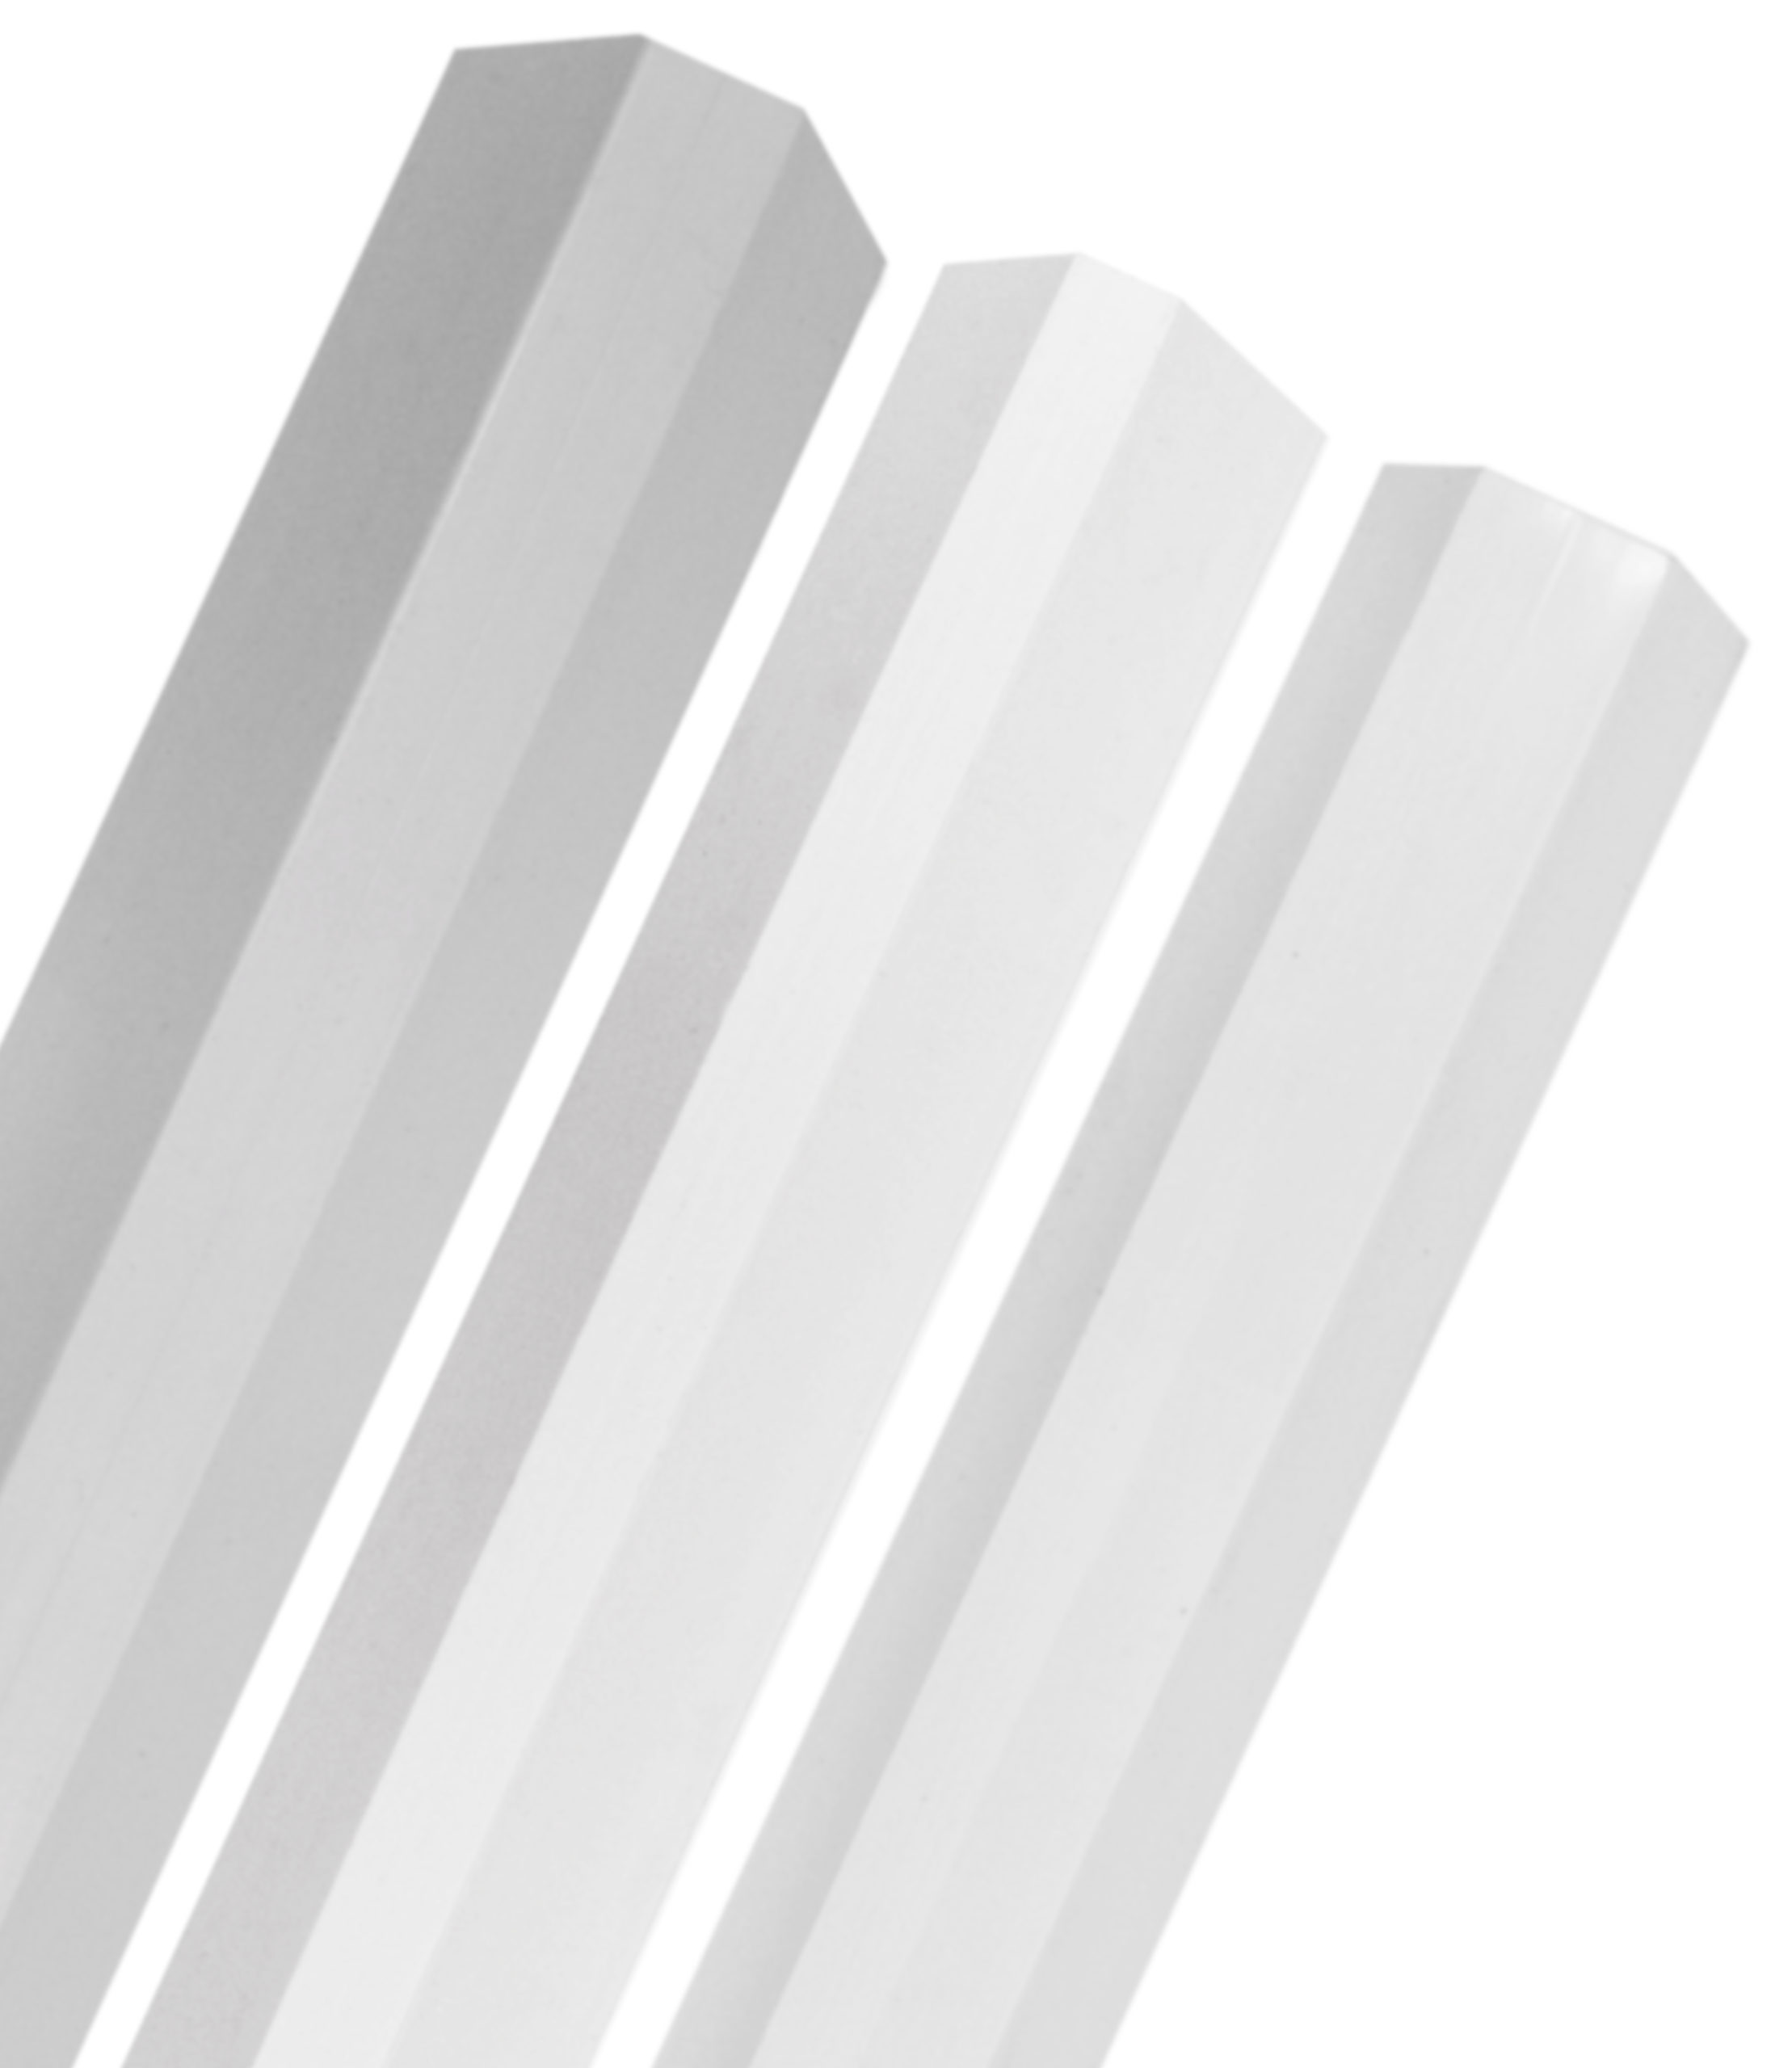 Clean Line Reveal rustication strips for tilt-up and precast designs details